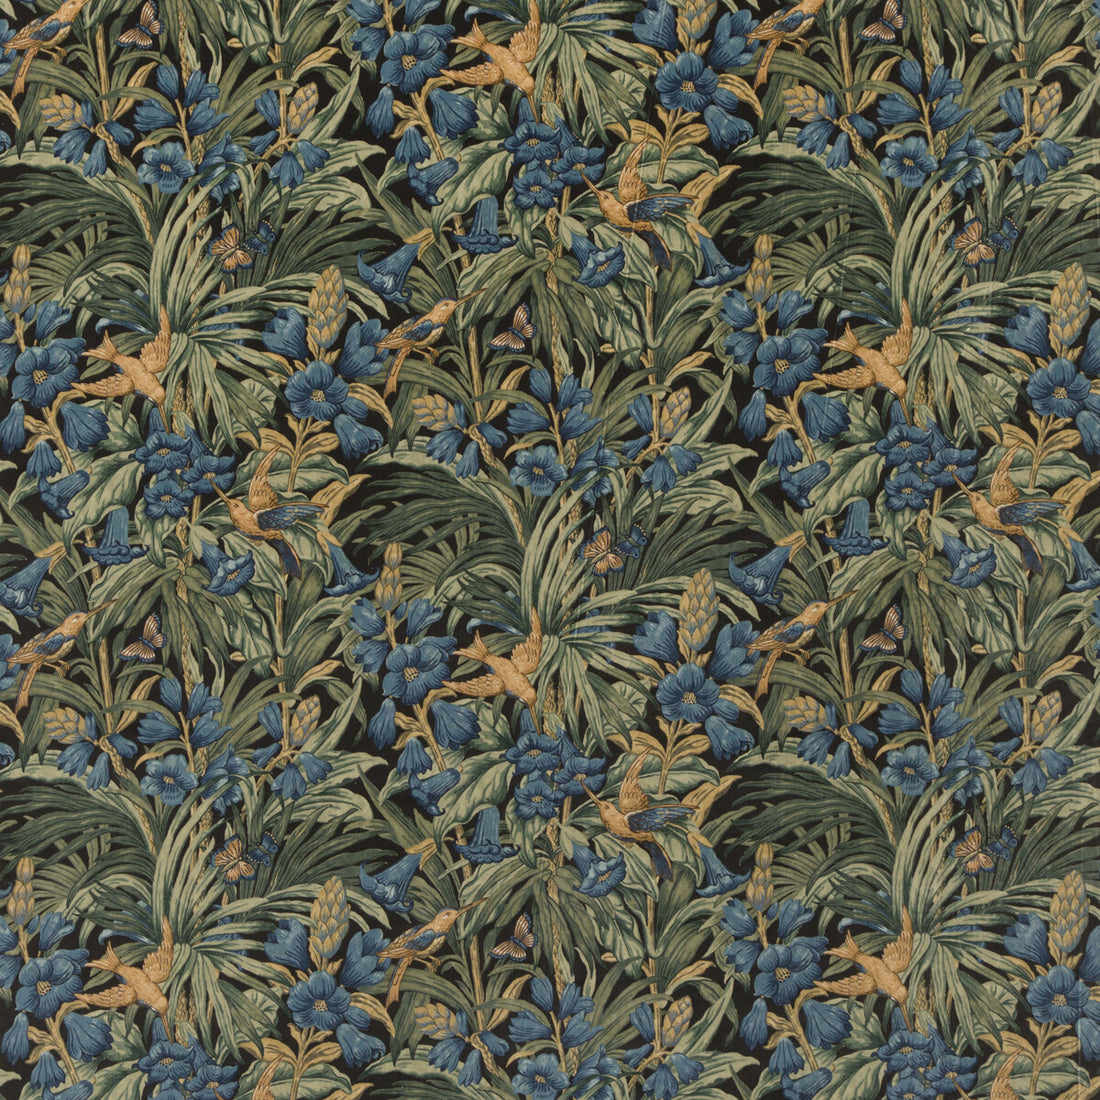 Trumpet Flowers Velvet fabric in dark indigo/teal color - pattern BP10623.1.0 - by G P &amp; J Baker in the Originals V collection